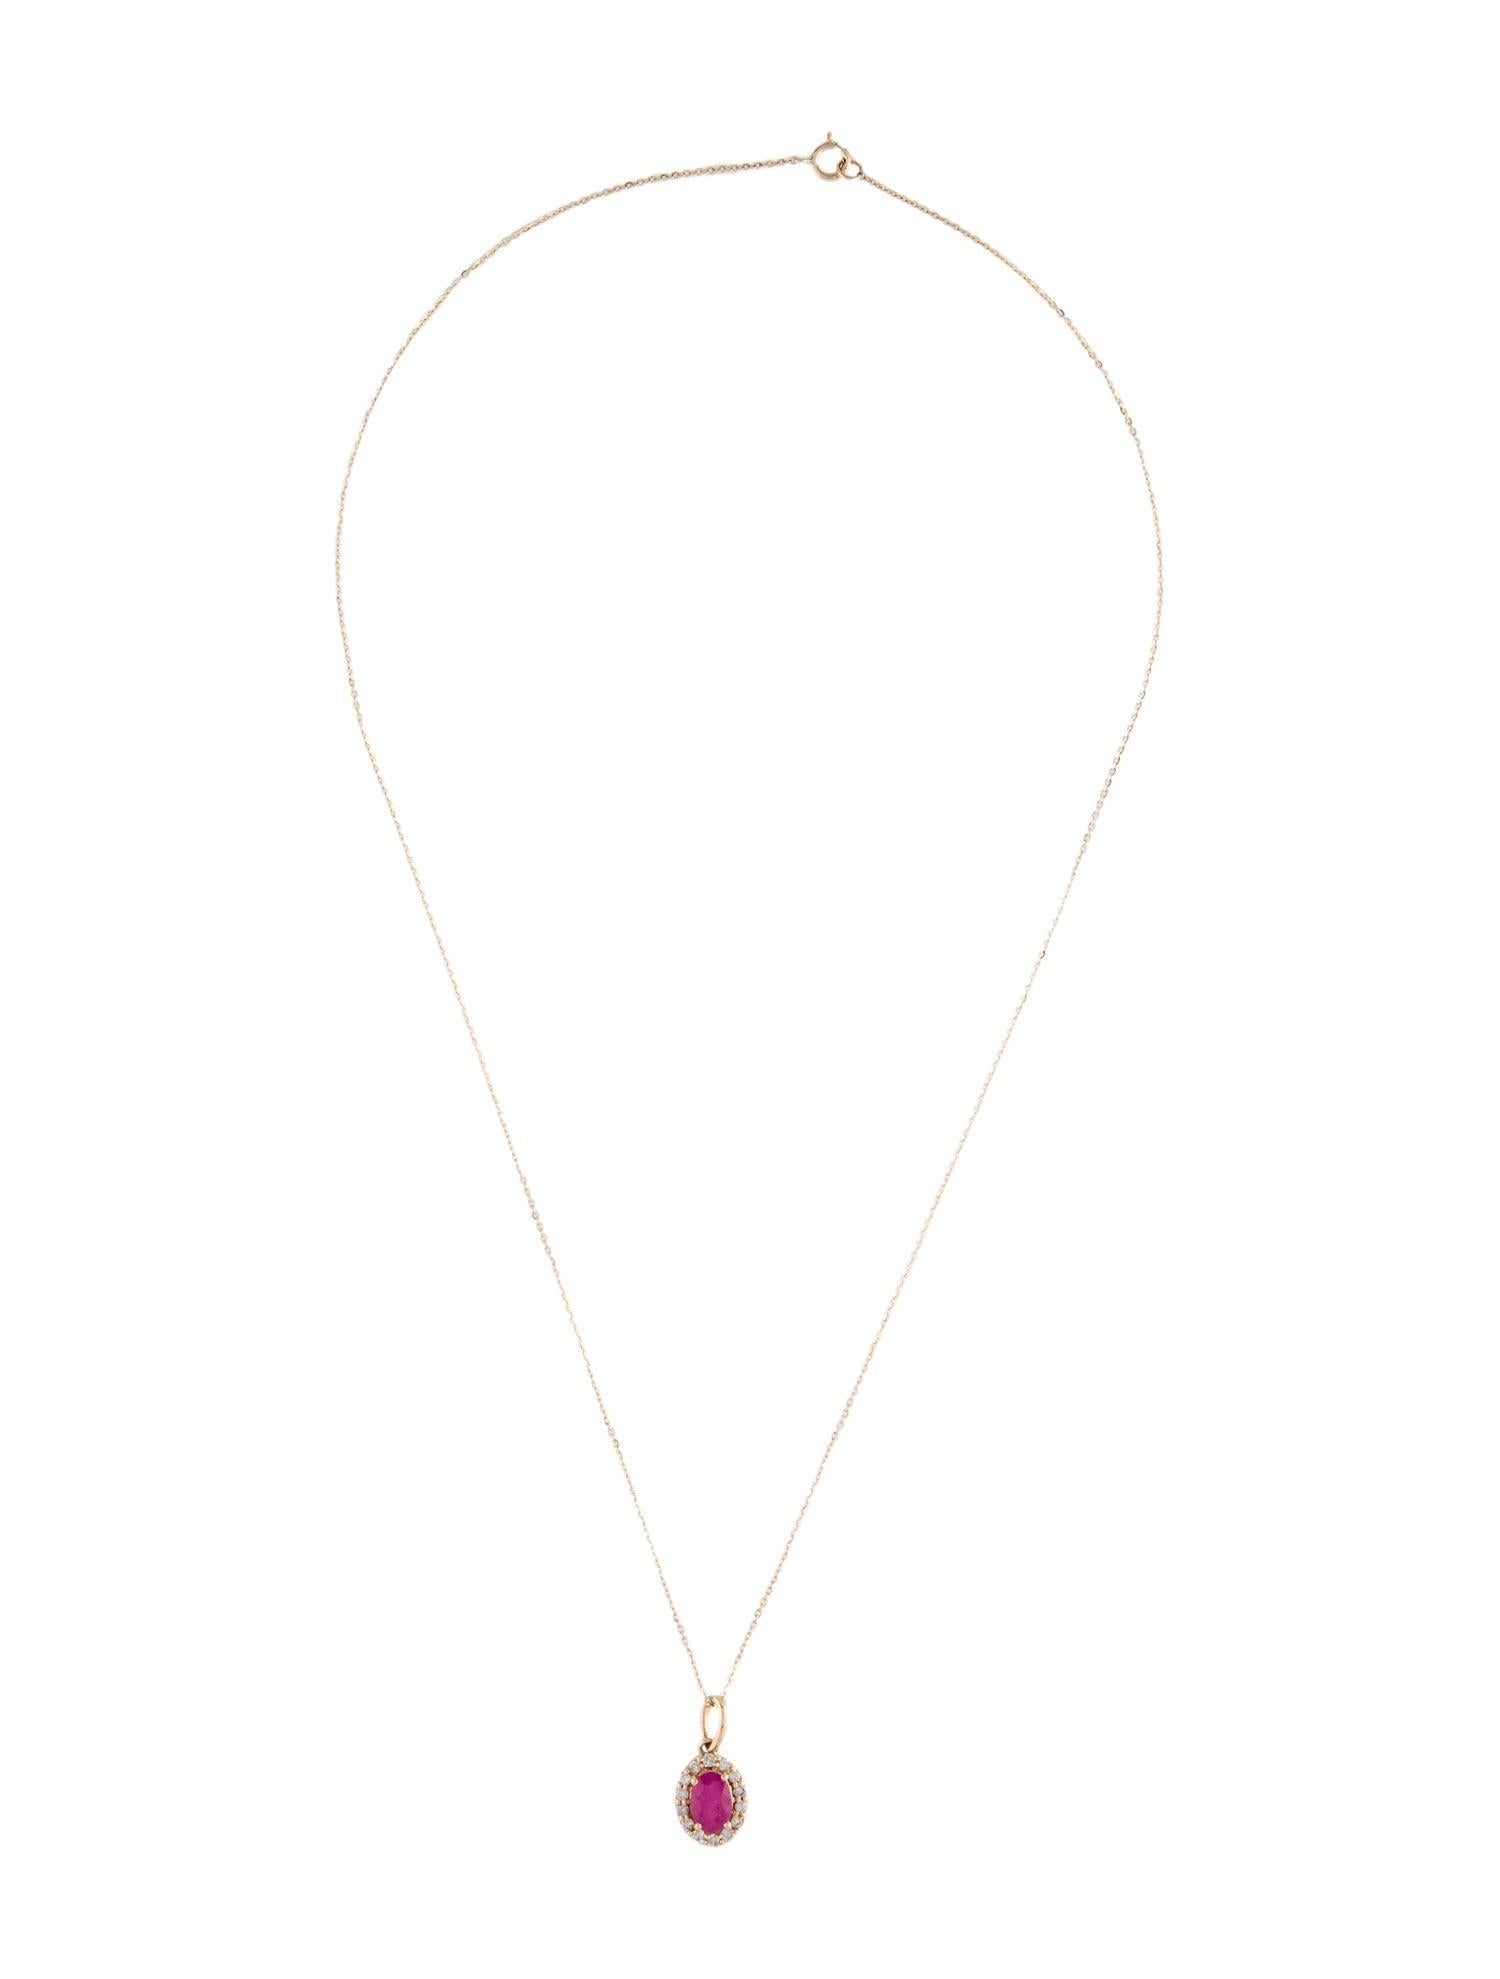 Brilliant Cut 14K Ruby & Diamond Pendant Necklace - Stunning Gemstone Statement Piece For Sale